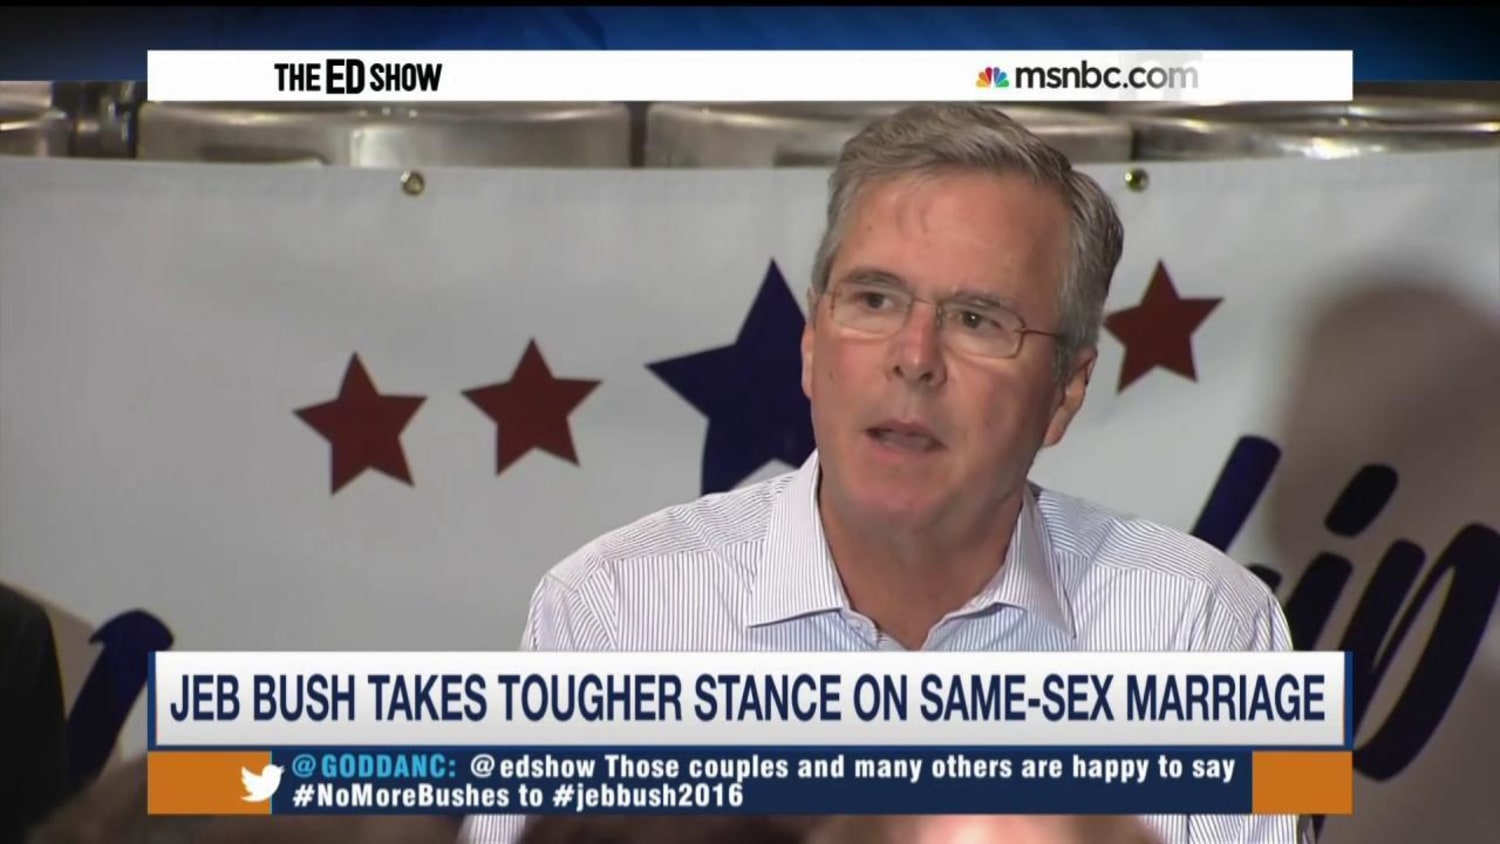 Bush takes tougher stance on same-sex marriage